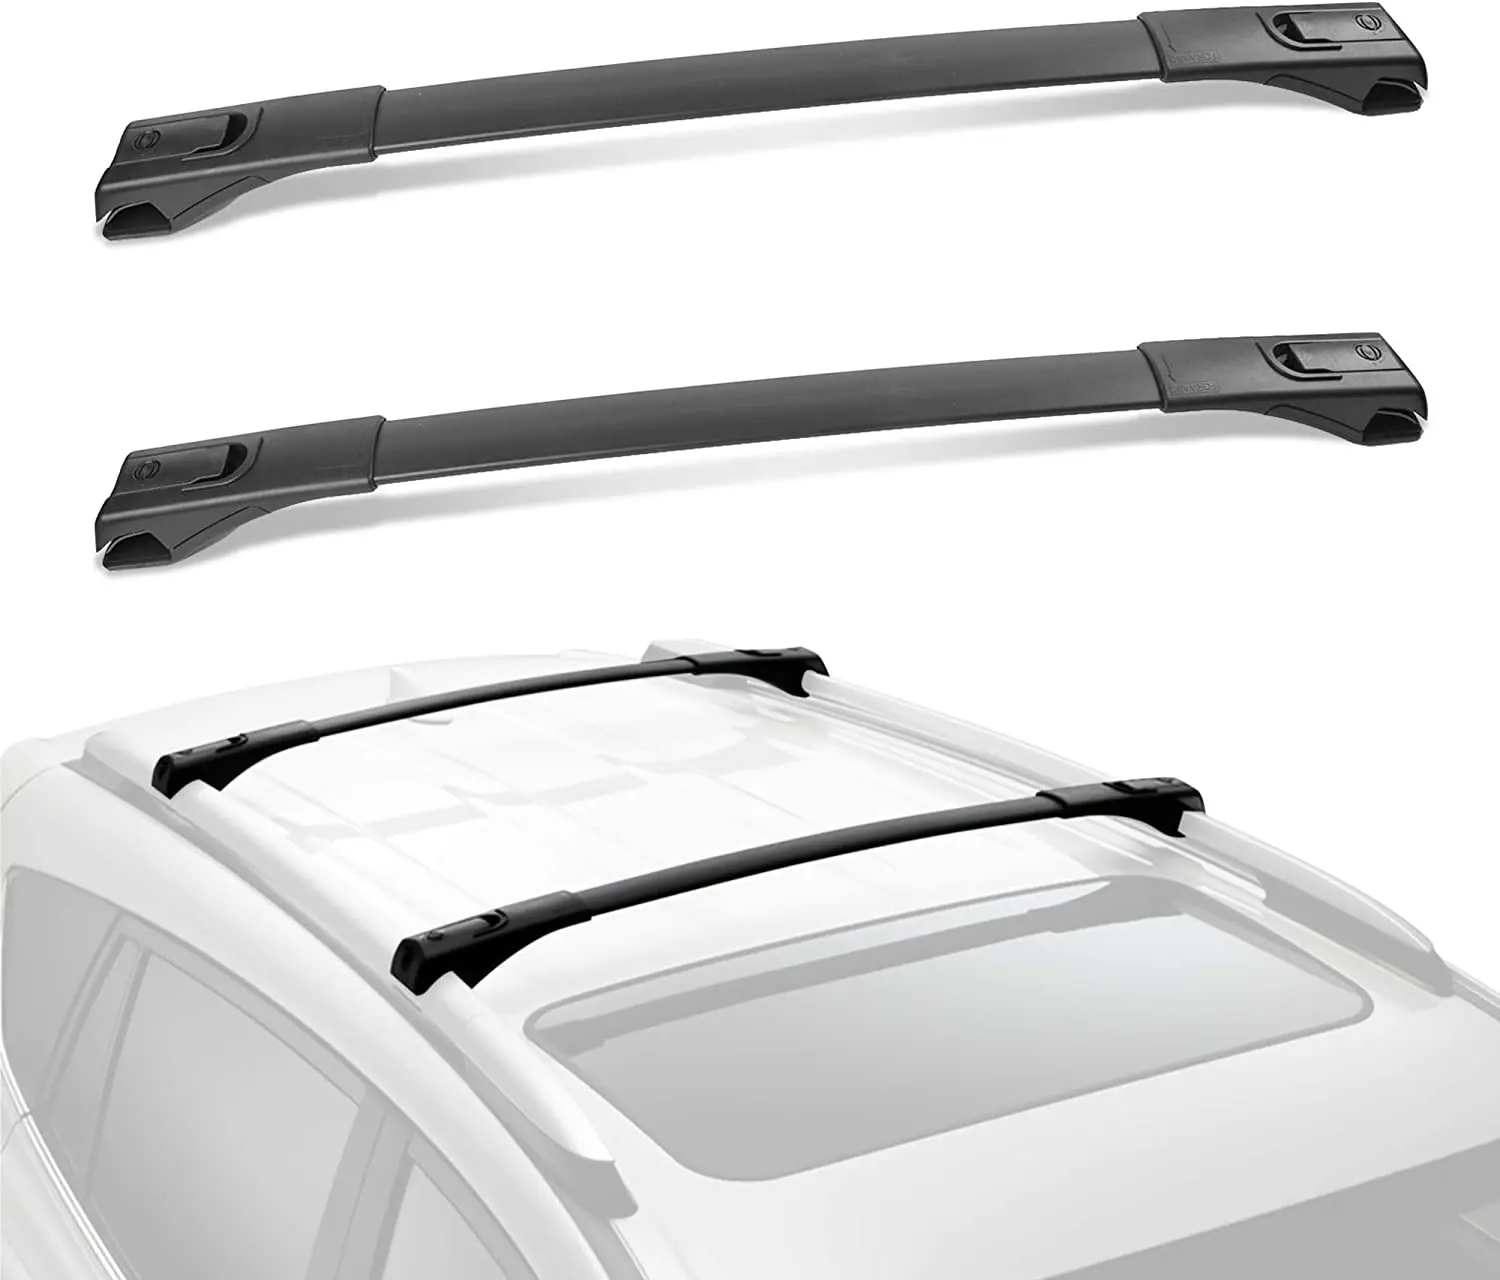 Roof Rack Compatible for Toyota Rav4 2013 2014 2015 2016 2017 2018 Luggage Cargo Cross Bar Rail Locking Crossbars Carrier